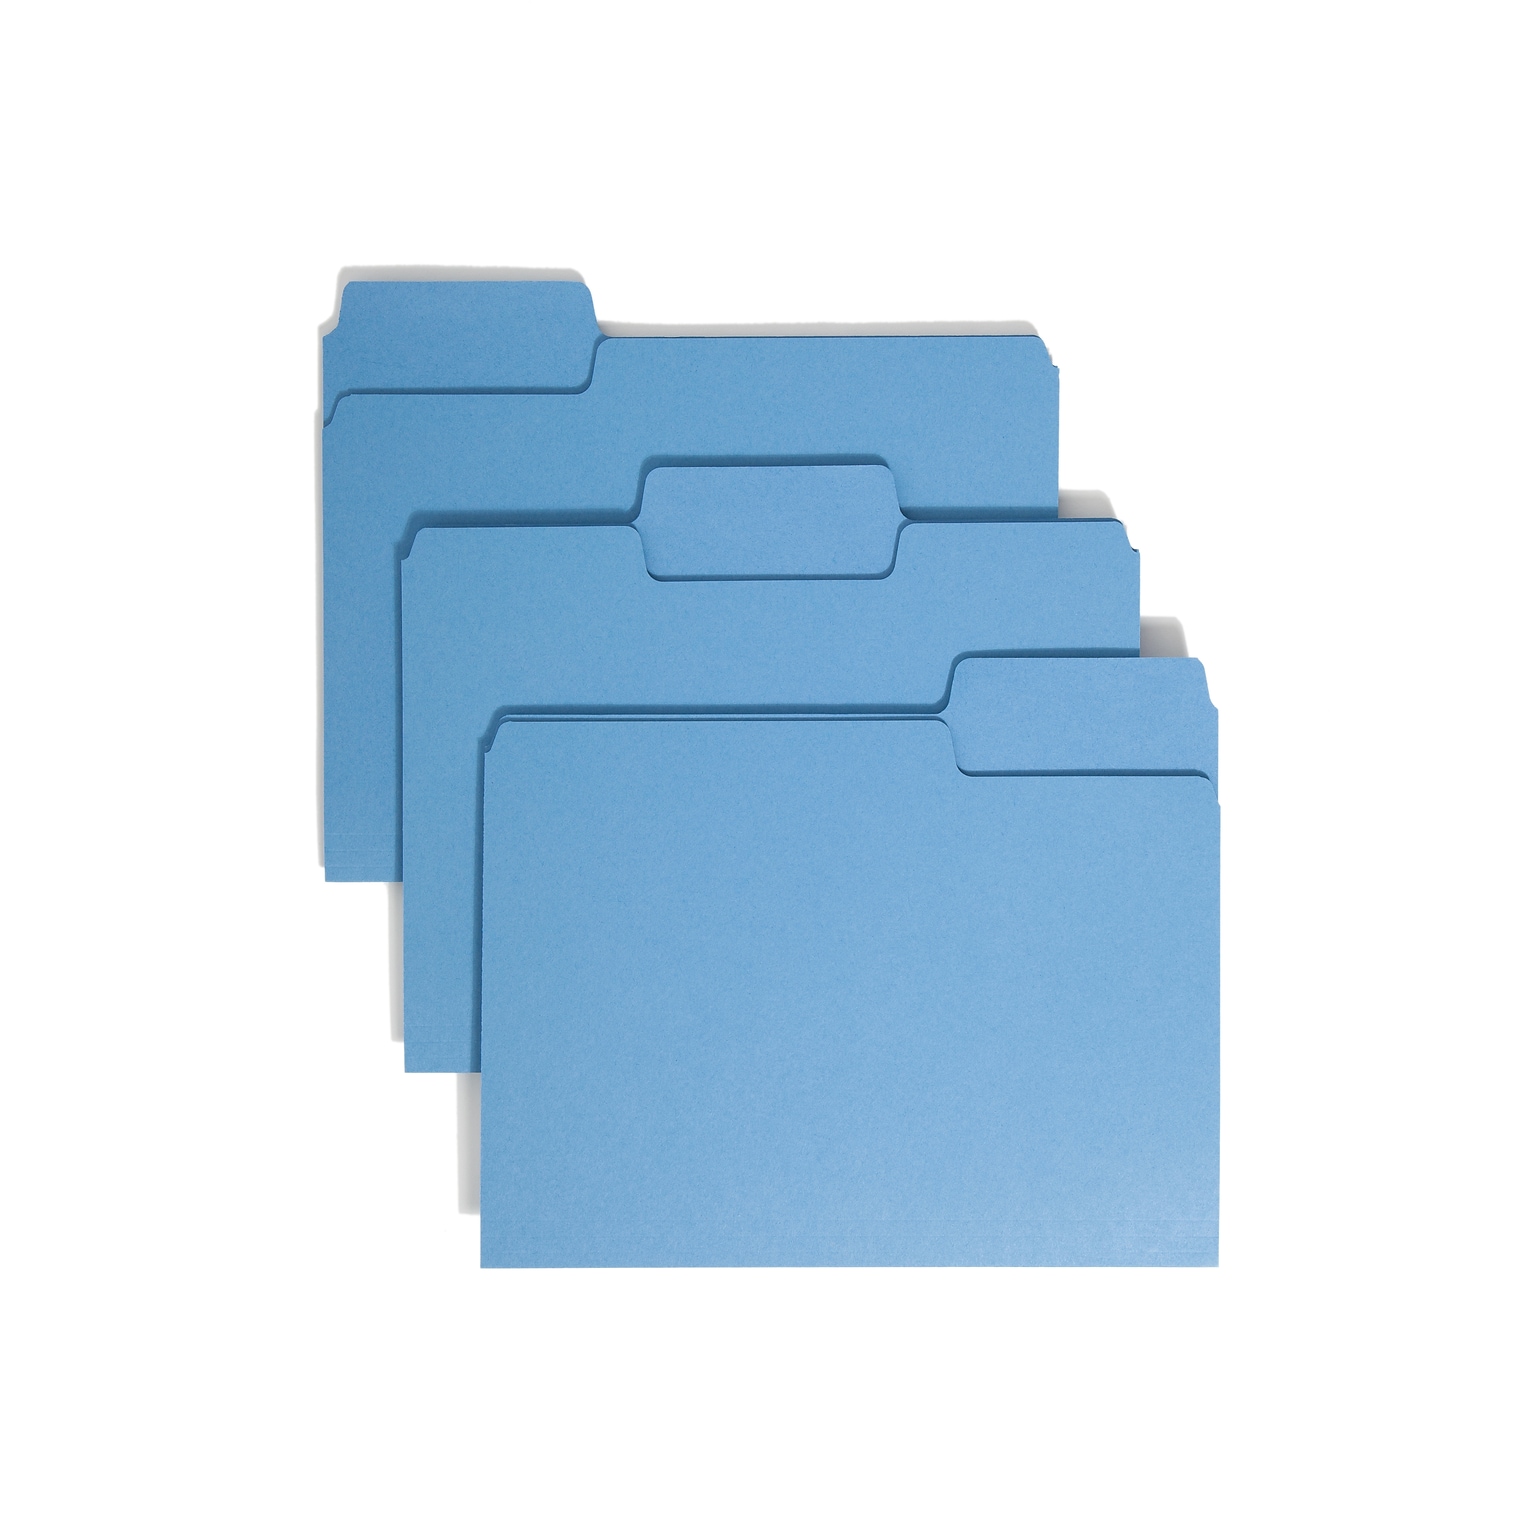 Smead SuperTab® File Folder, 3 Tab, Letter Size, Blue, 100/Box (11986)